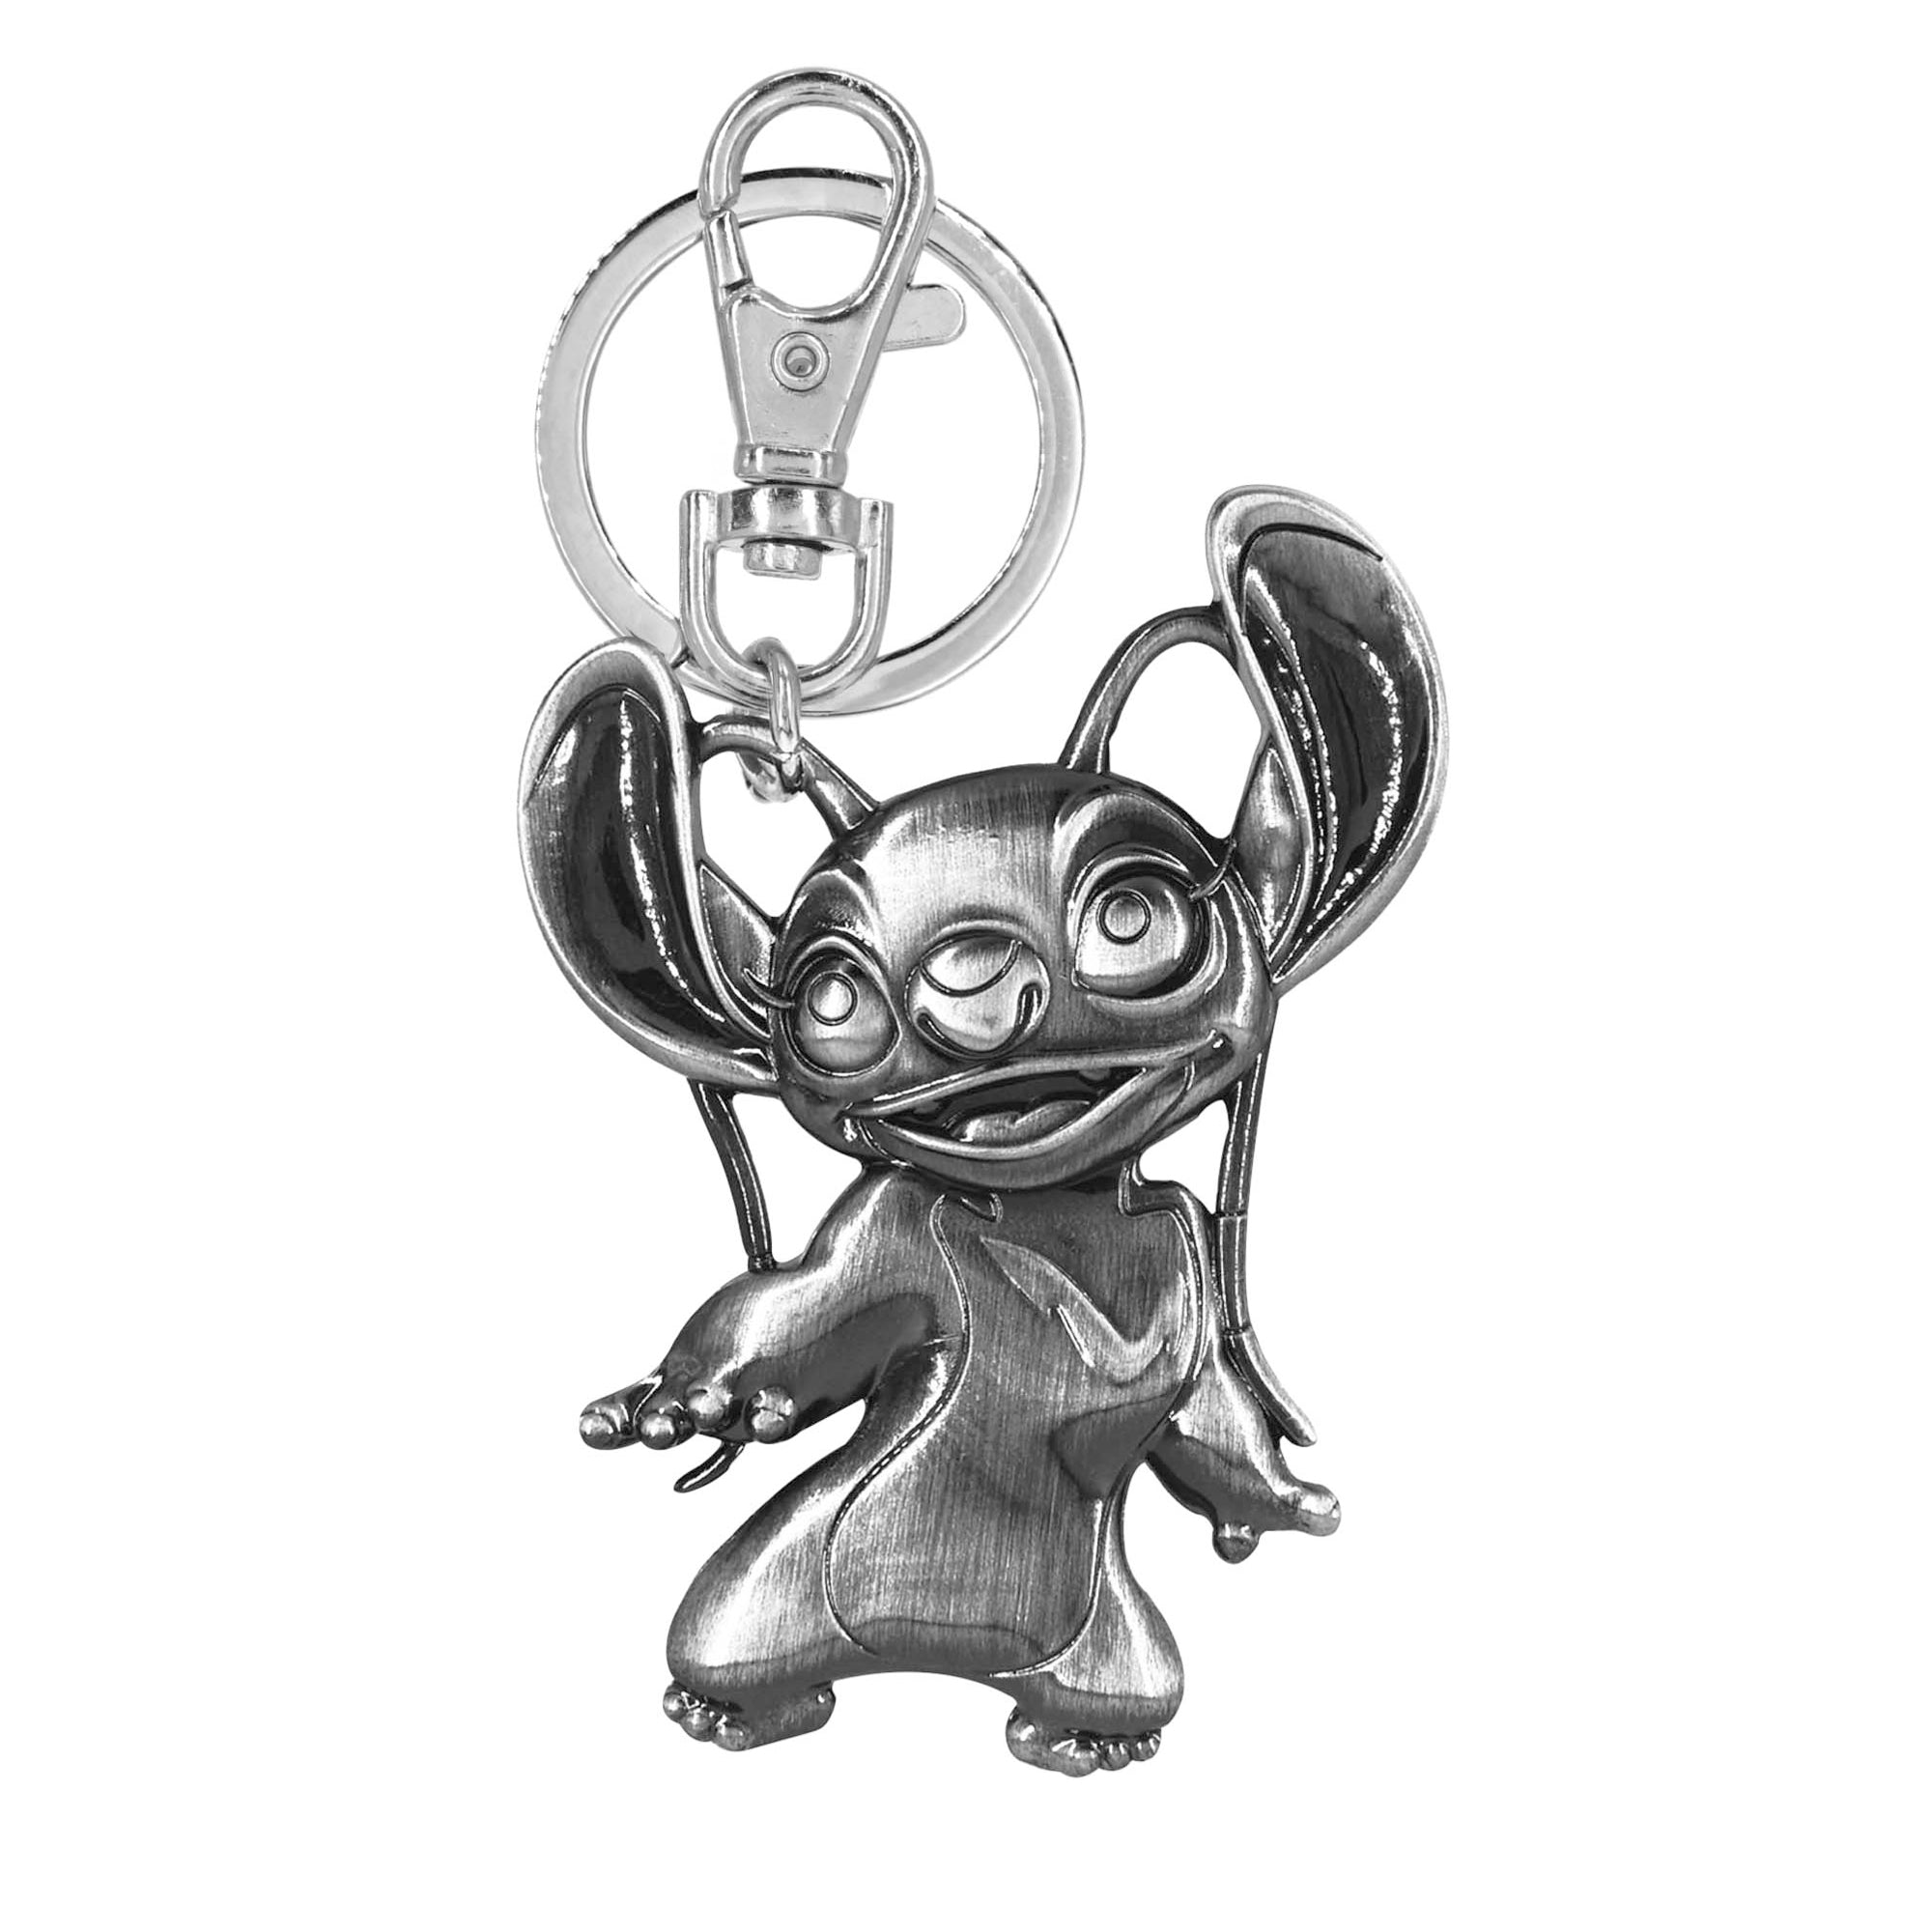 Disney Officially Licensed Lilo & Stitch Angel Key Ring Keychain